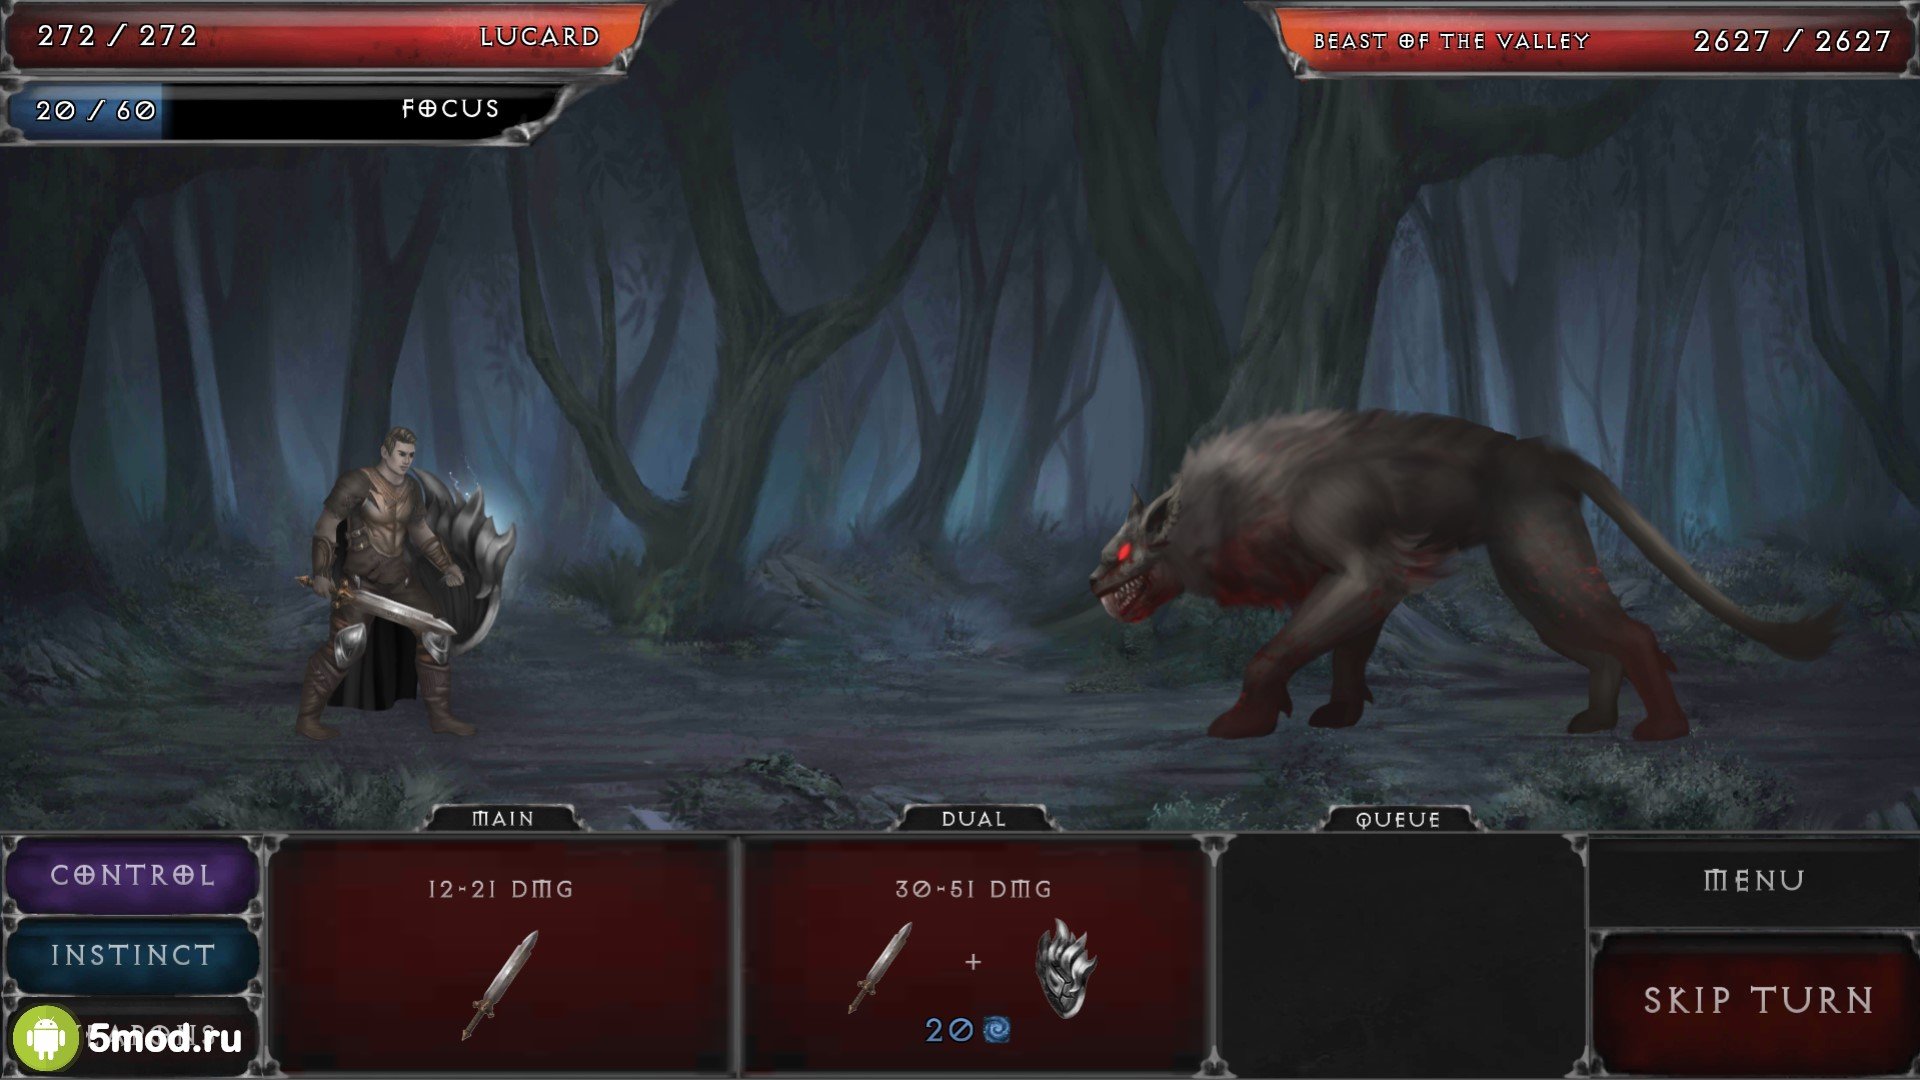 Скриншот 2 к игре Vampire's Fall: Origins v.1.5.45 [CODEX] (2019)